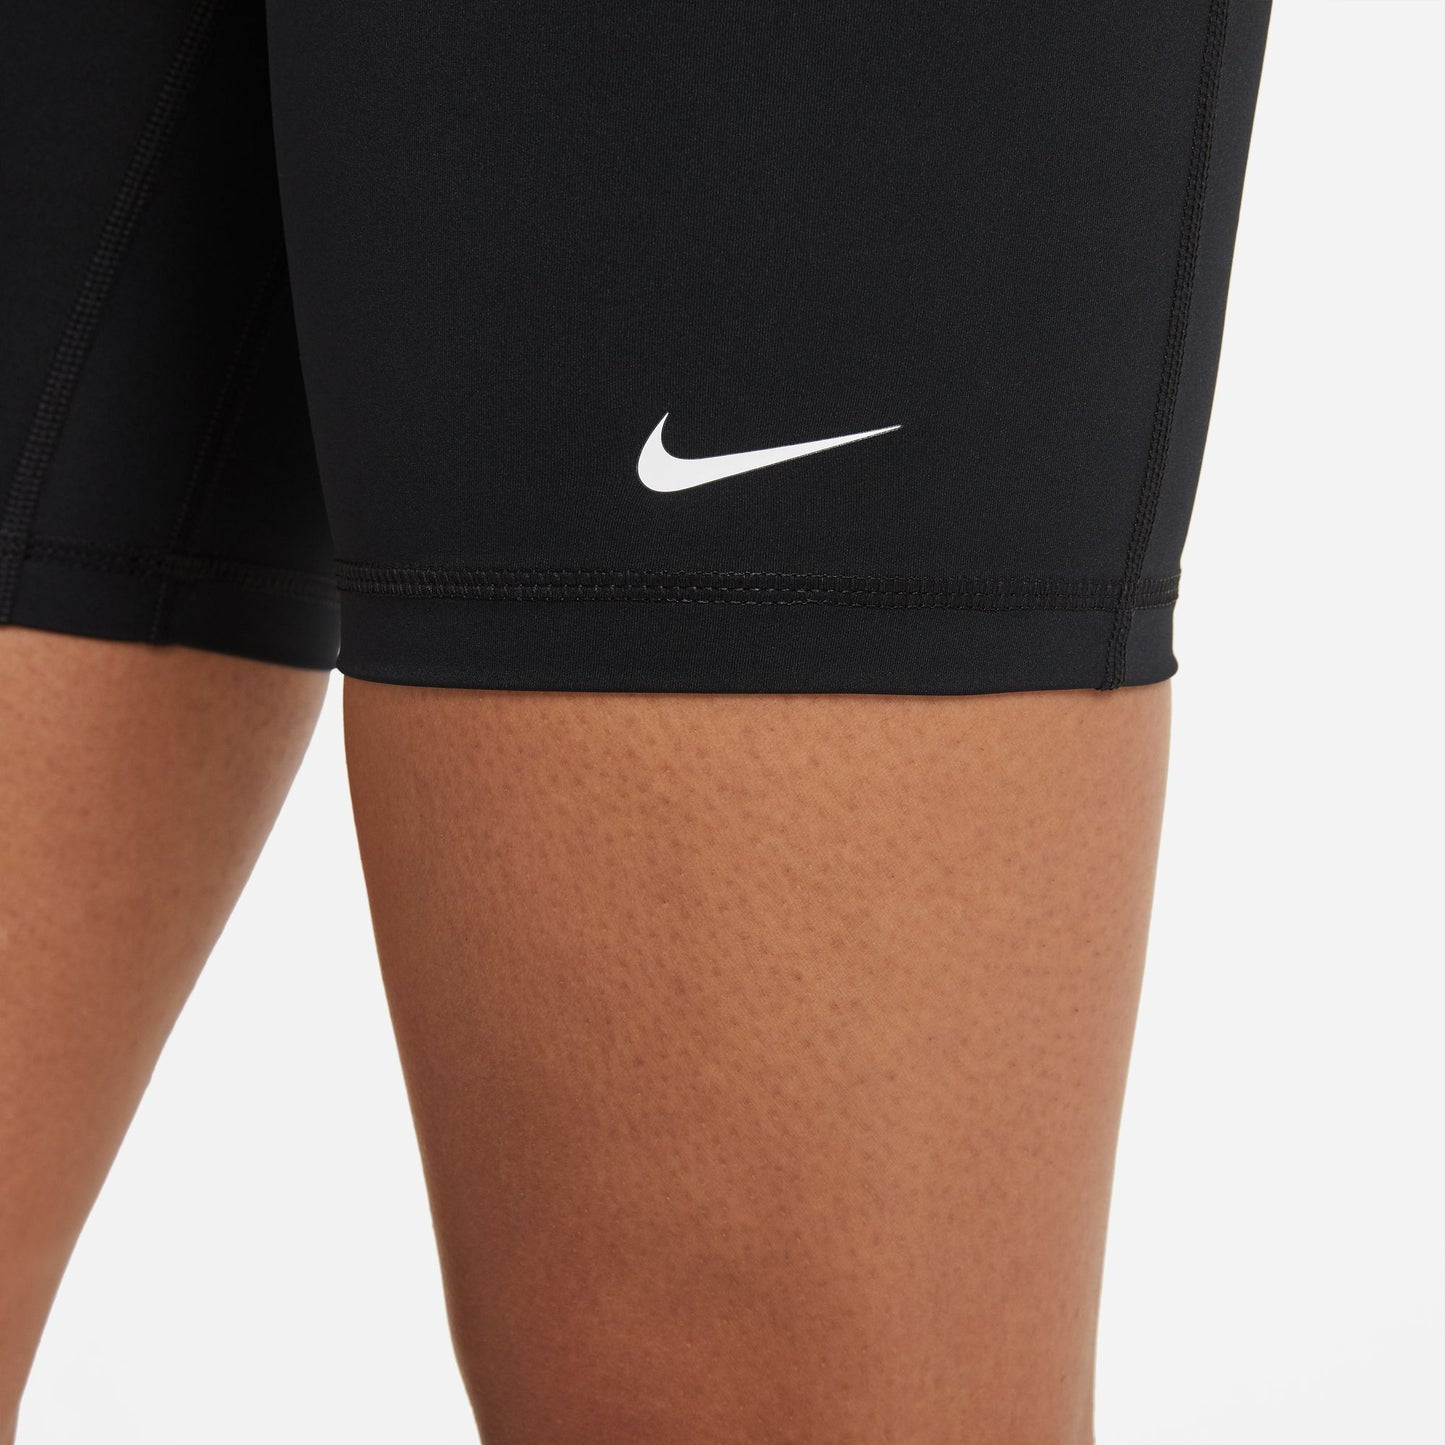 Pantalones cortos de 7" de talle alto para mujer Nike Pro 365